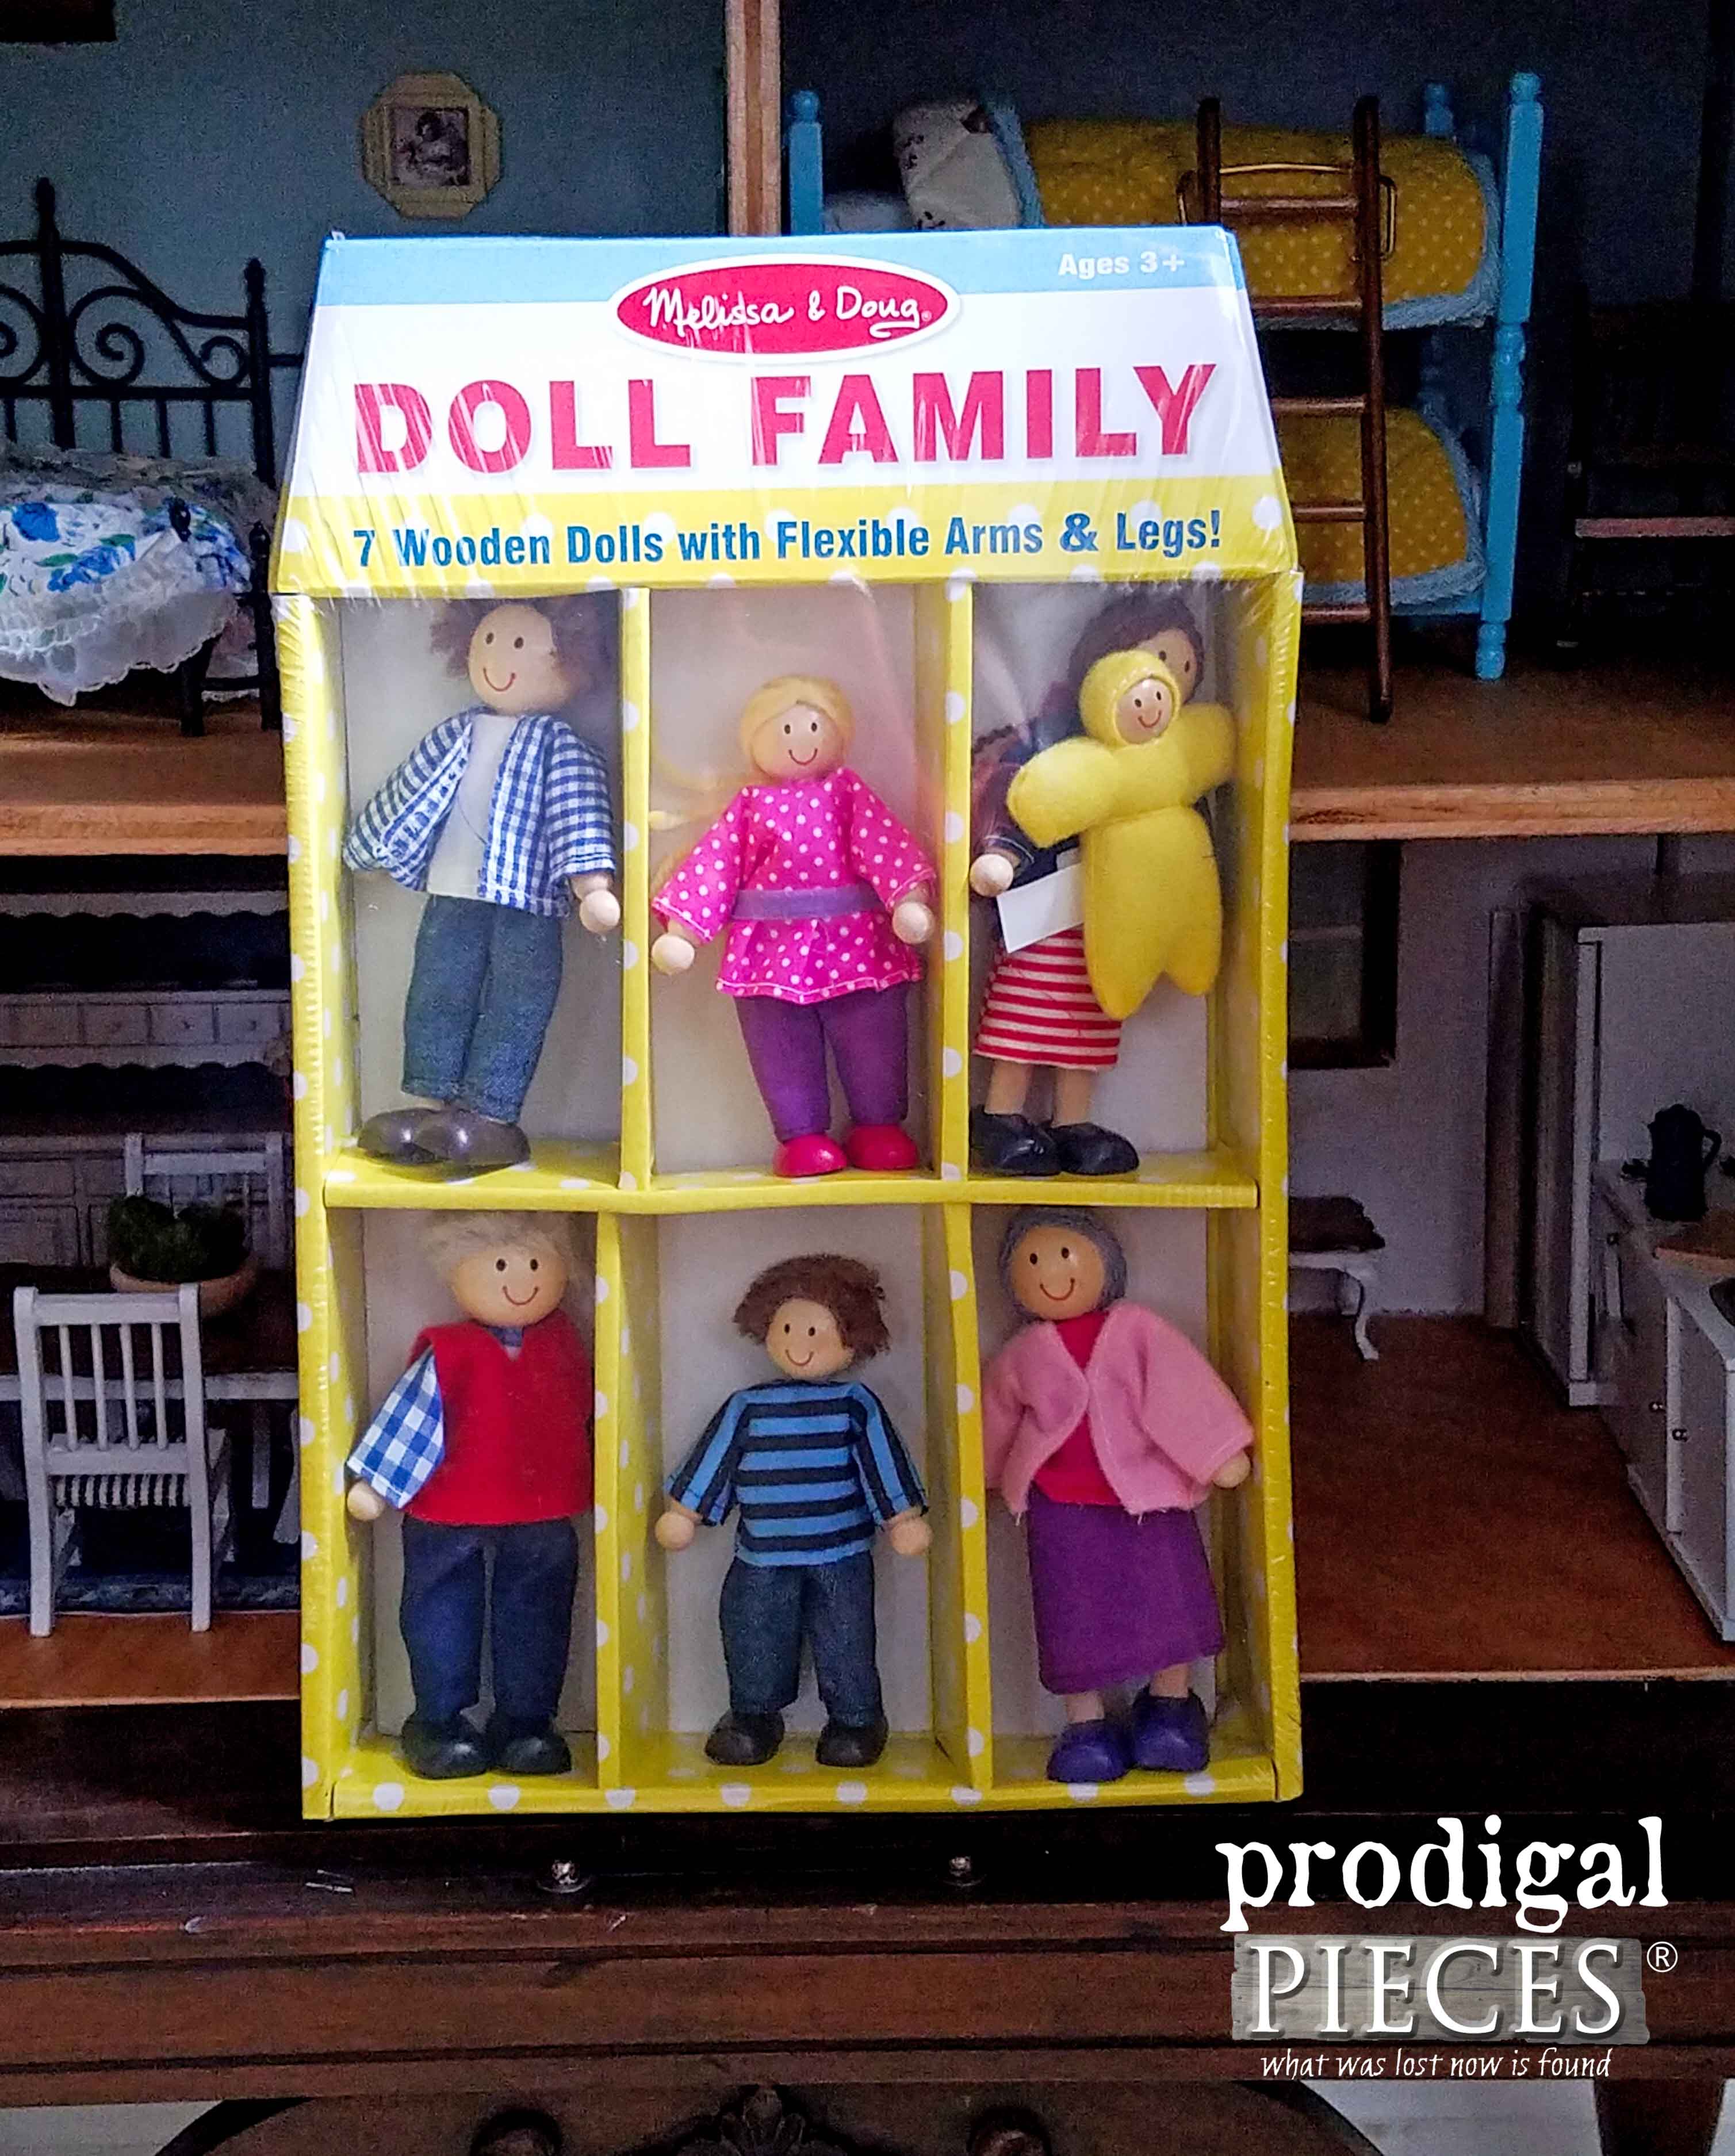 Melissa & Doug Wooden Dollhouse Family | Prodigal Pieces | www.prodigalpieces.com